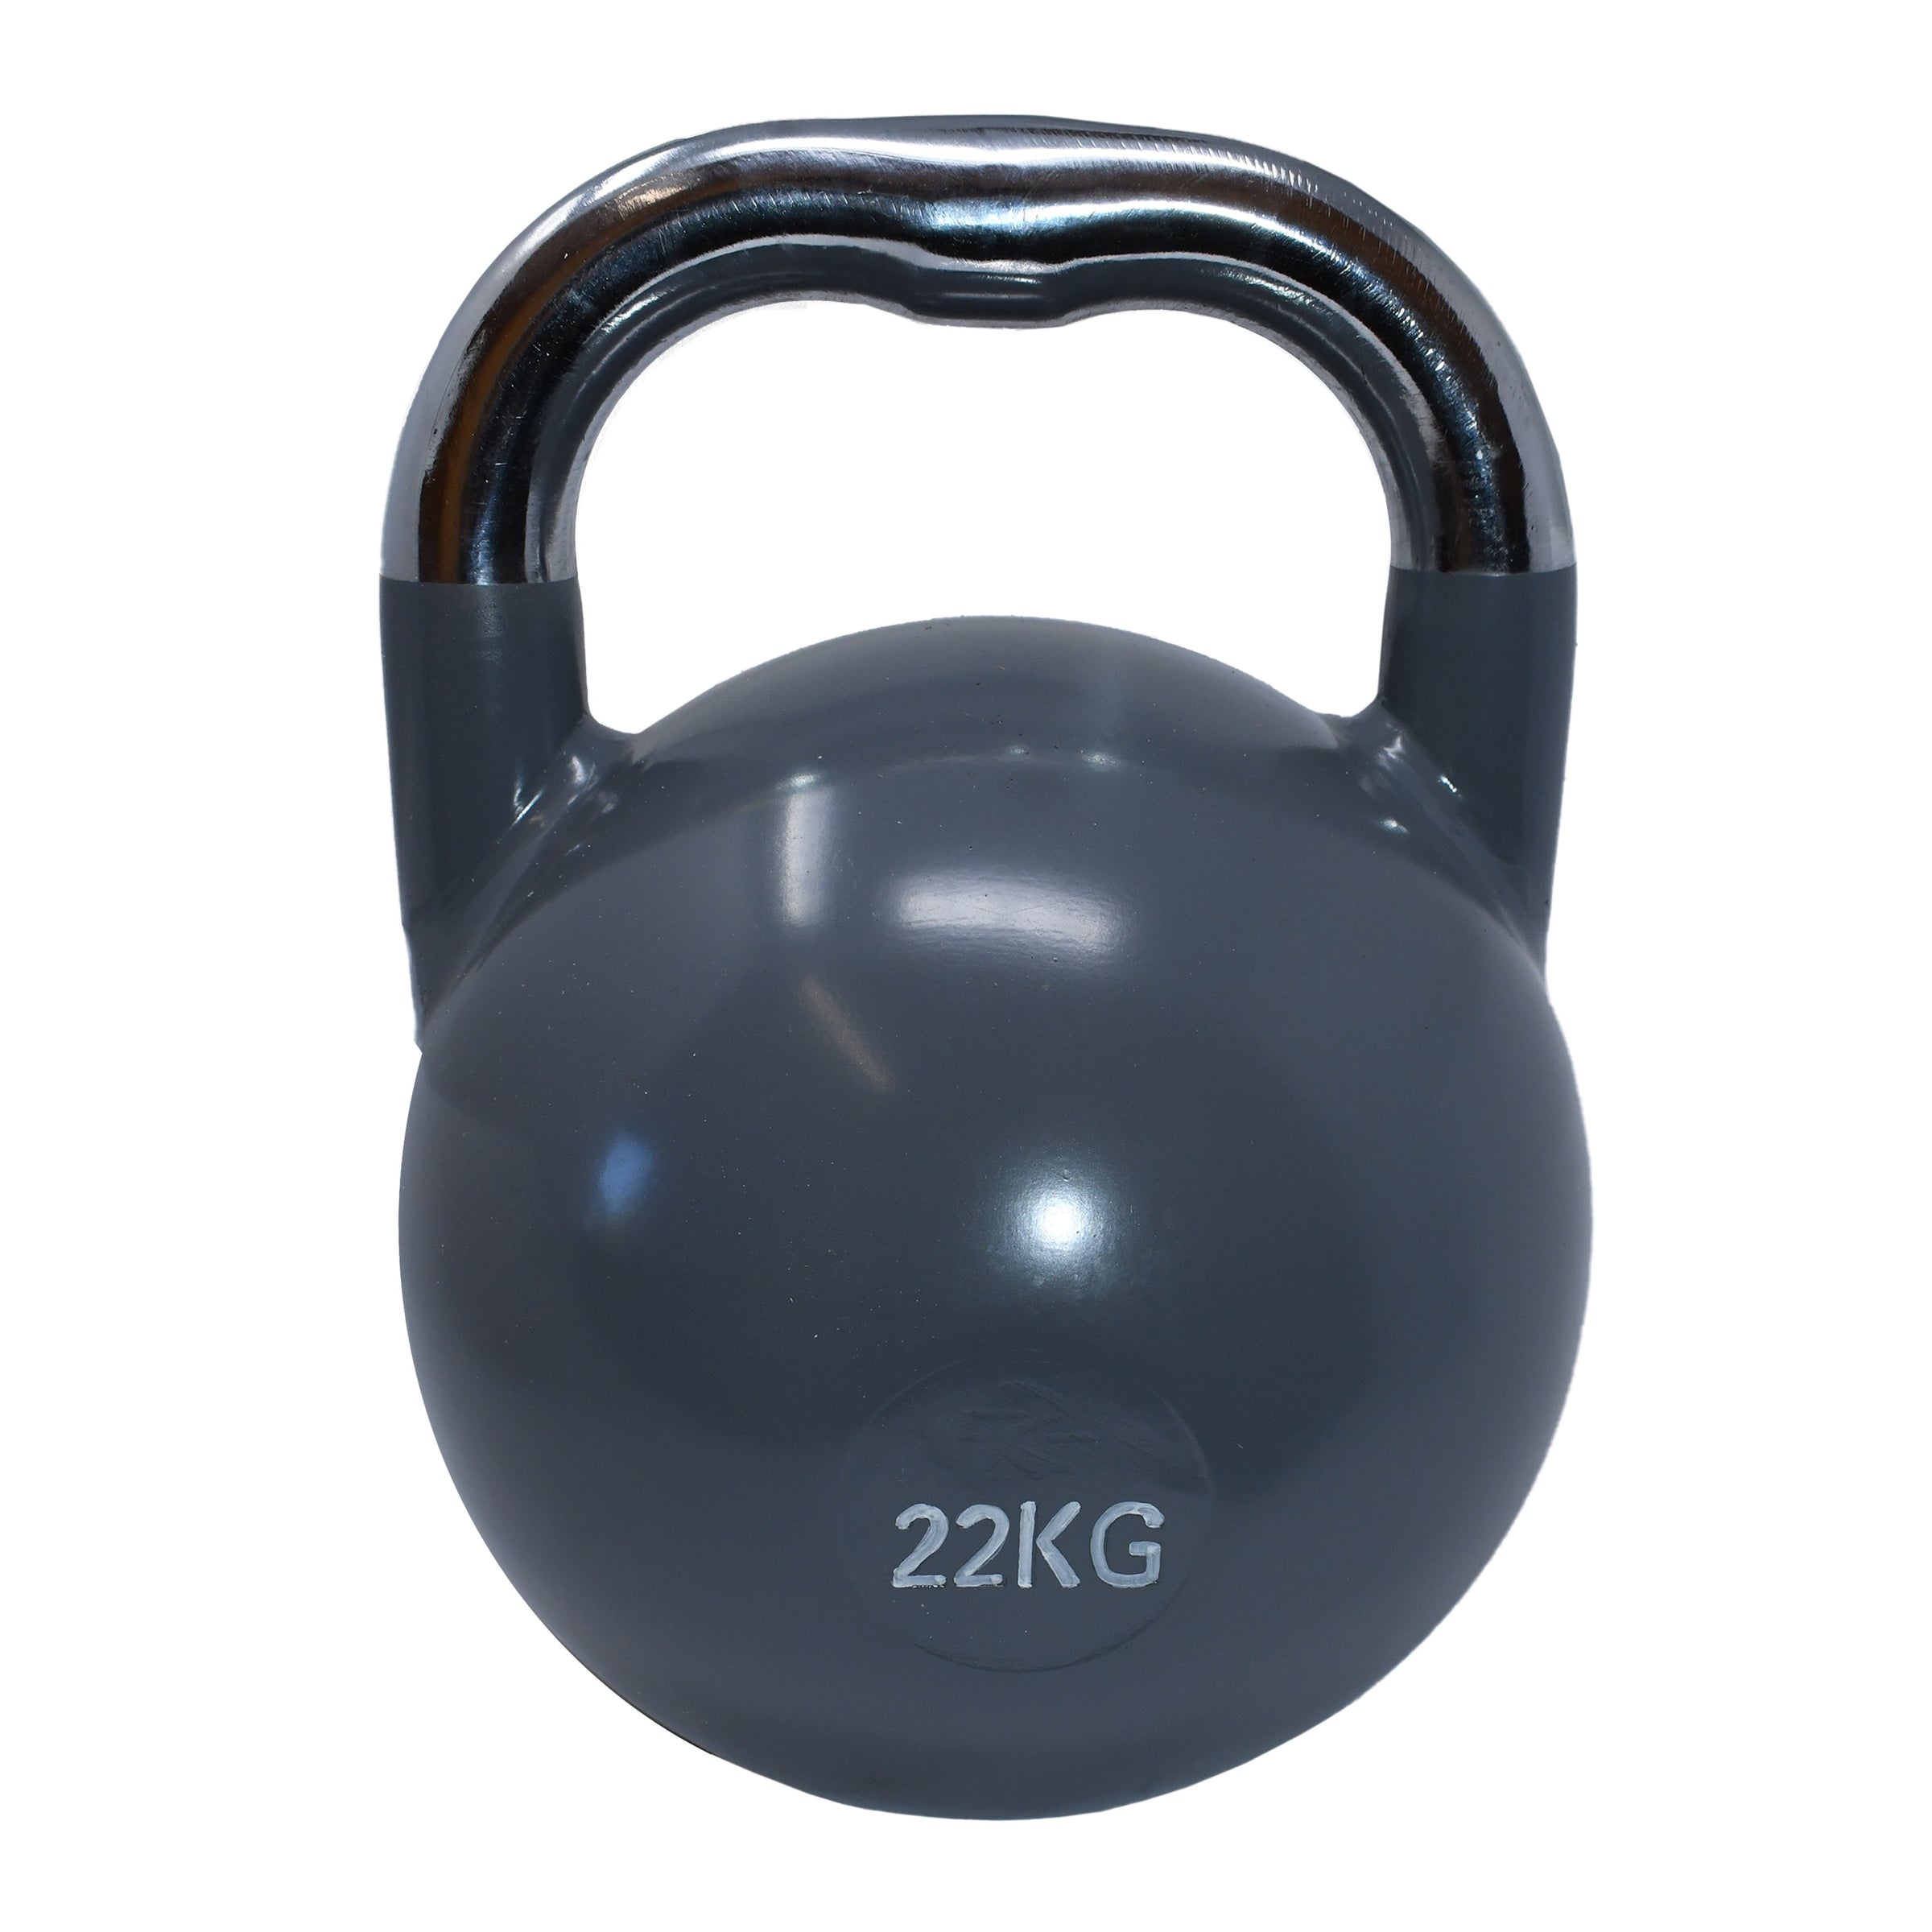 Premium Coated Steel Kettlebell - 49 lbs (22 kg) - Gray